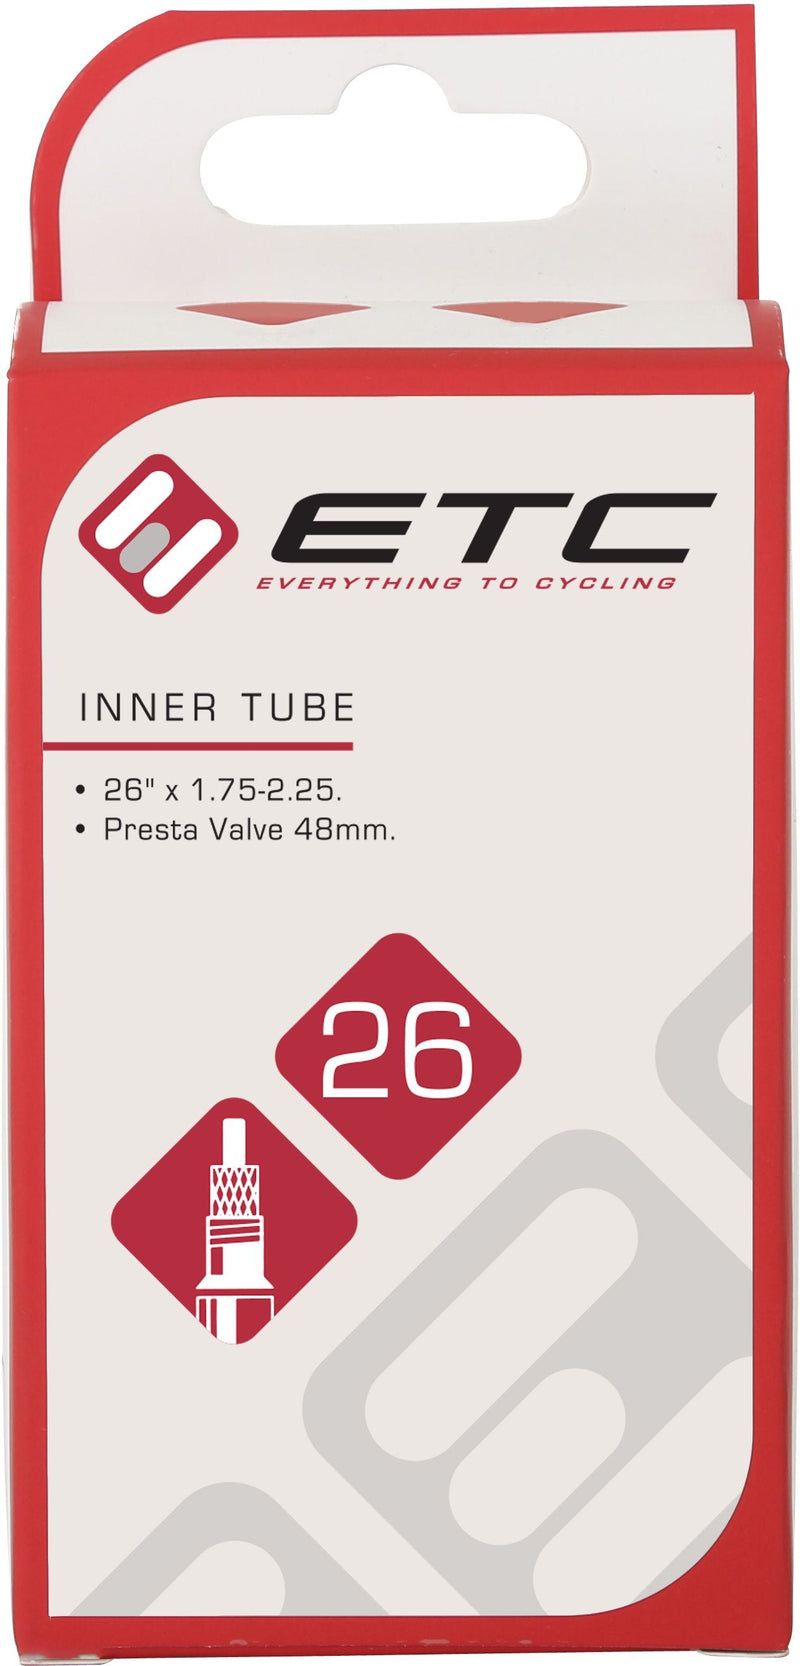 2x Bicycle InnerTubes All Sizes Schrader and Presta Valve - Premium Bike Inner Tubes (Pair)